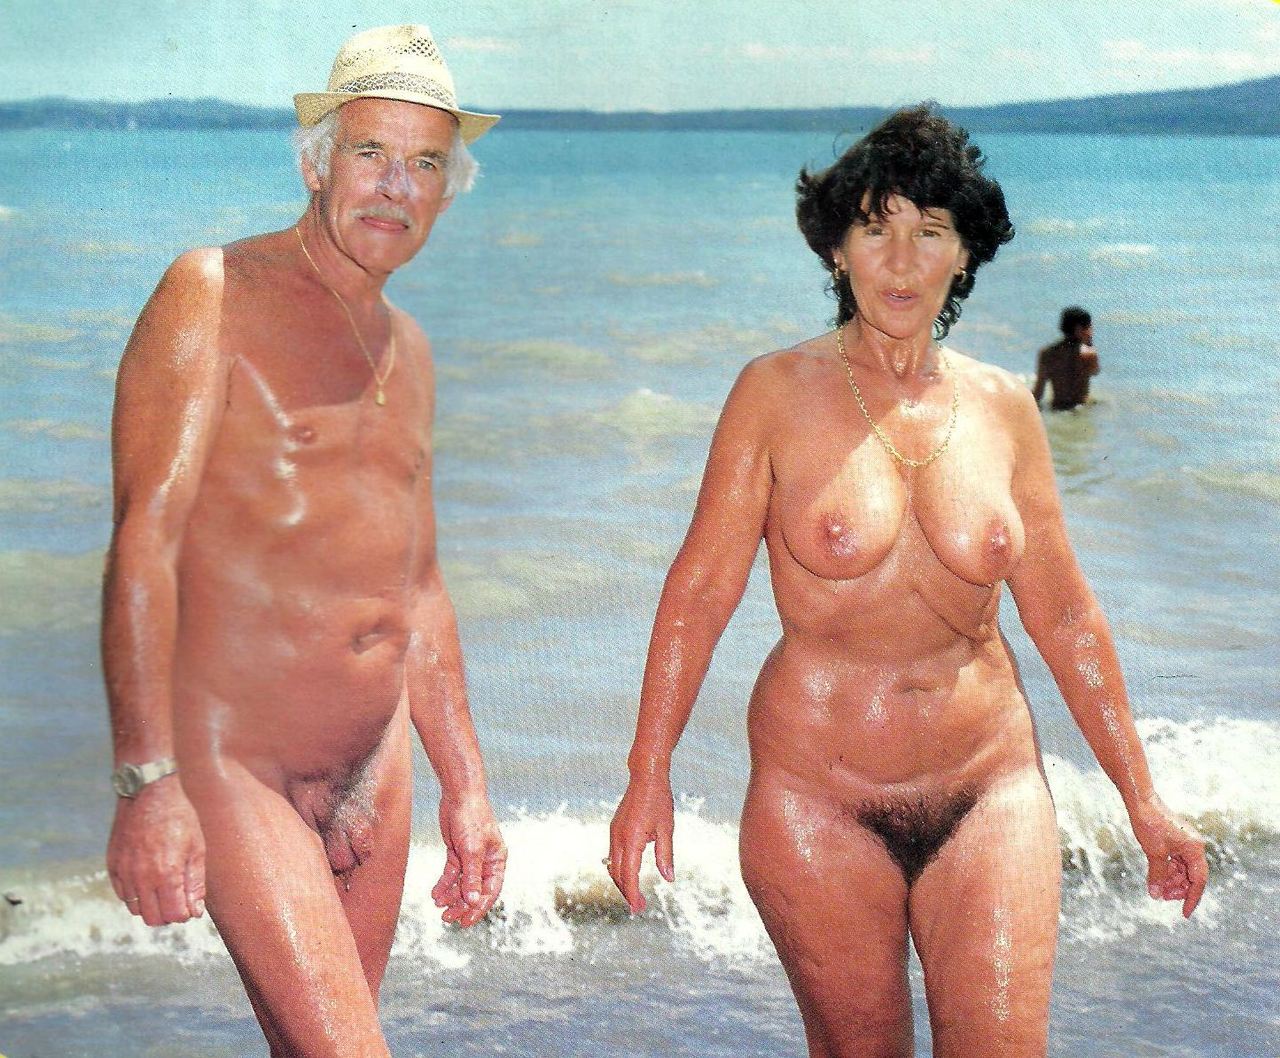 https://www.nudismlife.com/galleries/nudists_and_nude/nudists_couple/nudists_nude_naturists_couple_1524.jpg